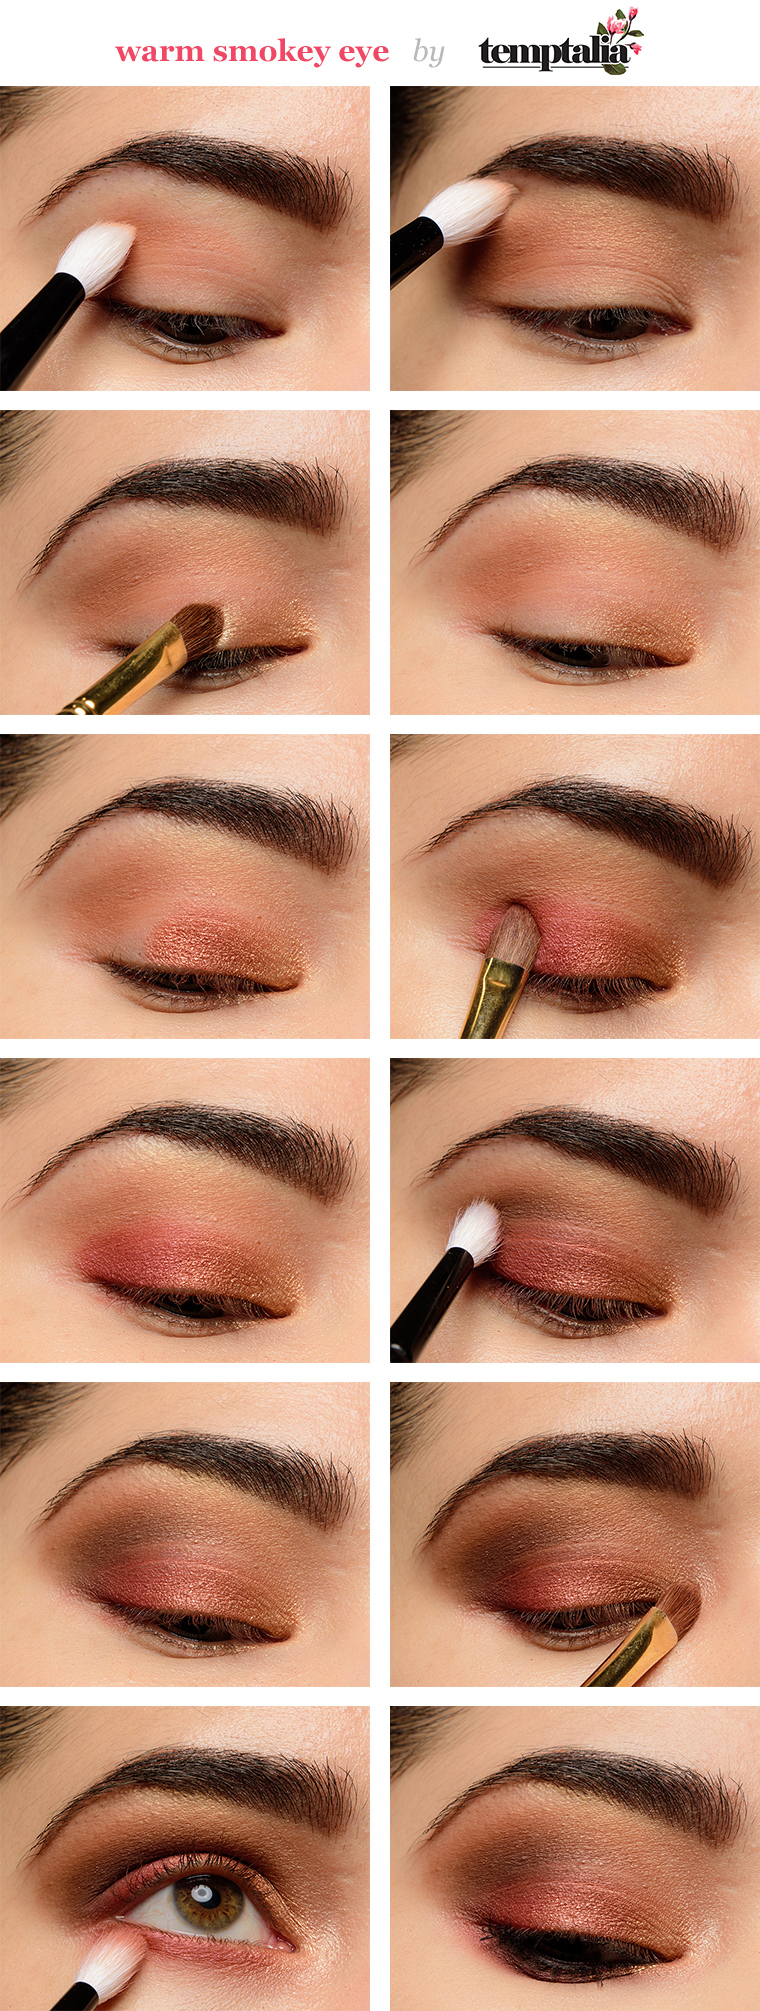 Eye Makeup Step By Step Pics How To Apply Eyeshadow Smokey Eye Makeup Tutorial For Beginners